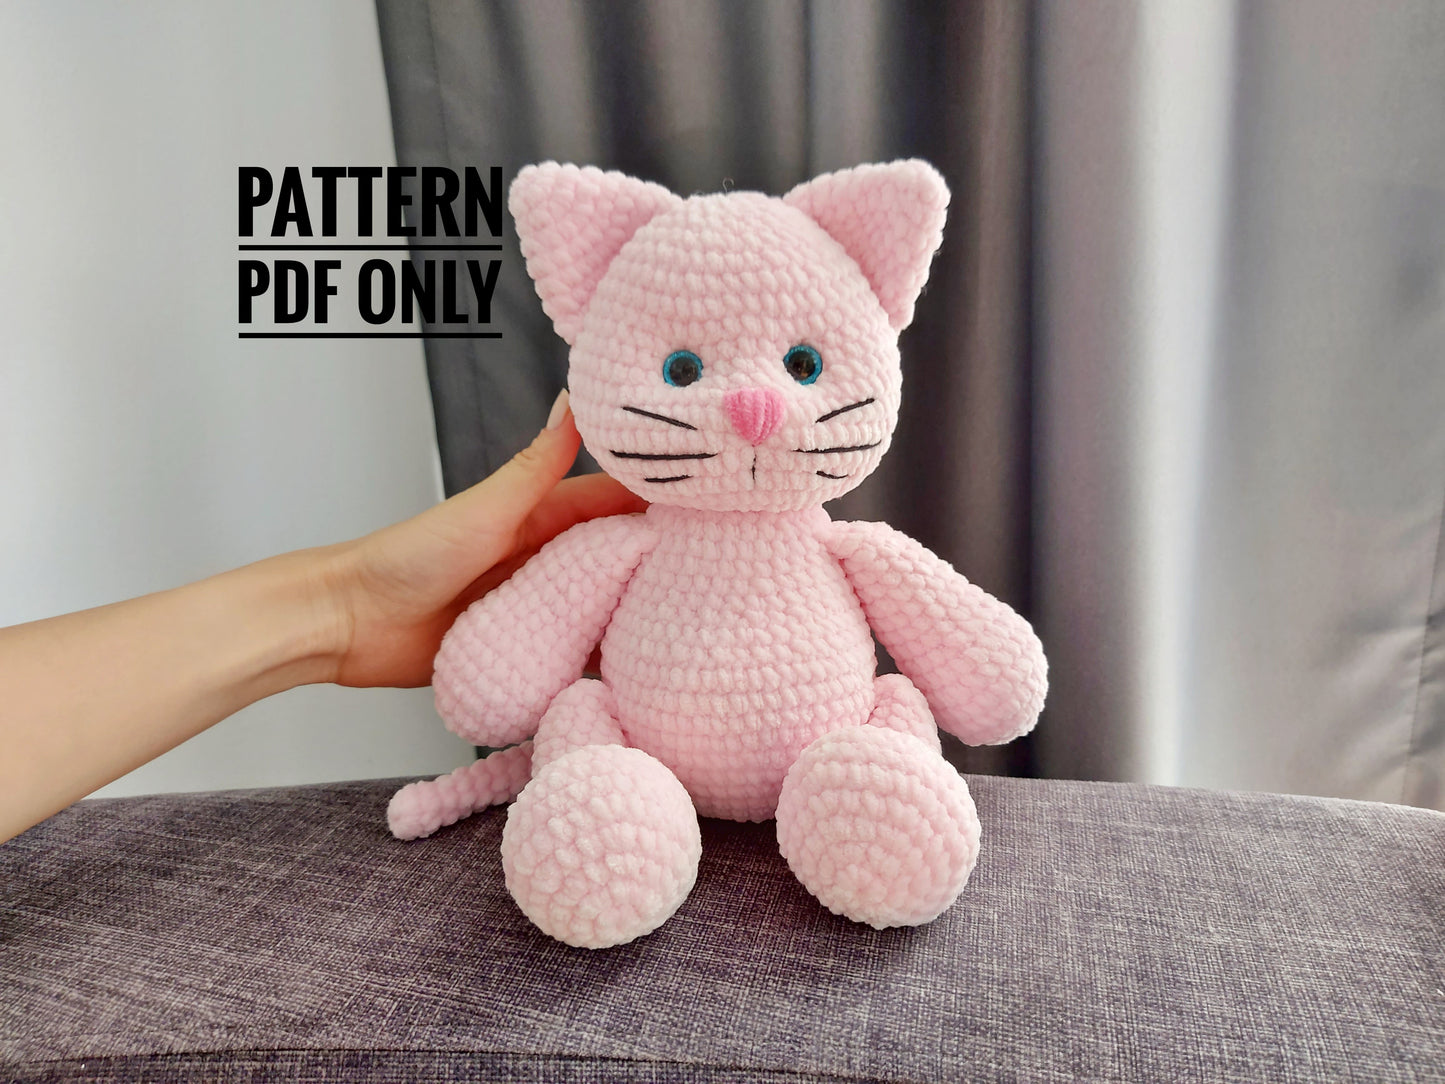 Crochet cat doll patern, Cat Amigurumi Pattern, seamless crocheted kitten instructions, baby shower, birthday gift, diy present, home decor